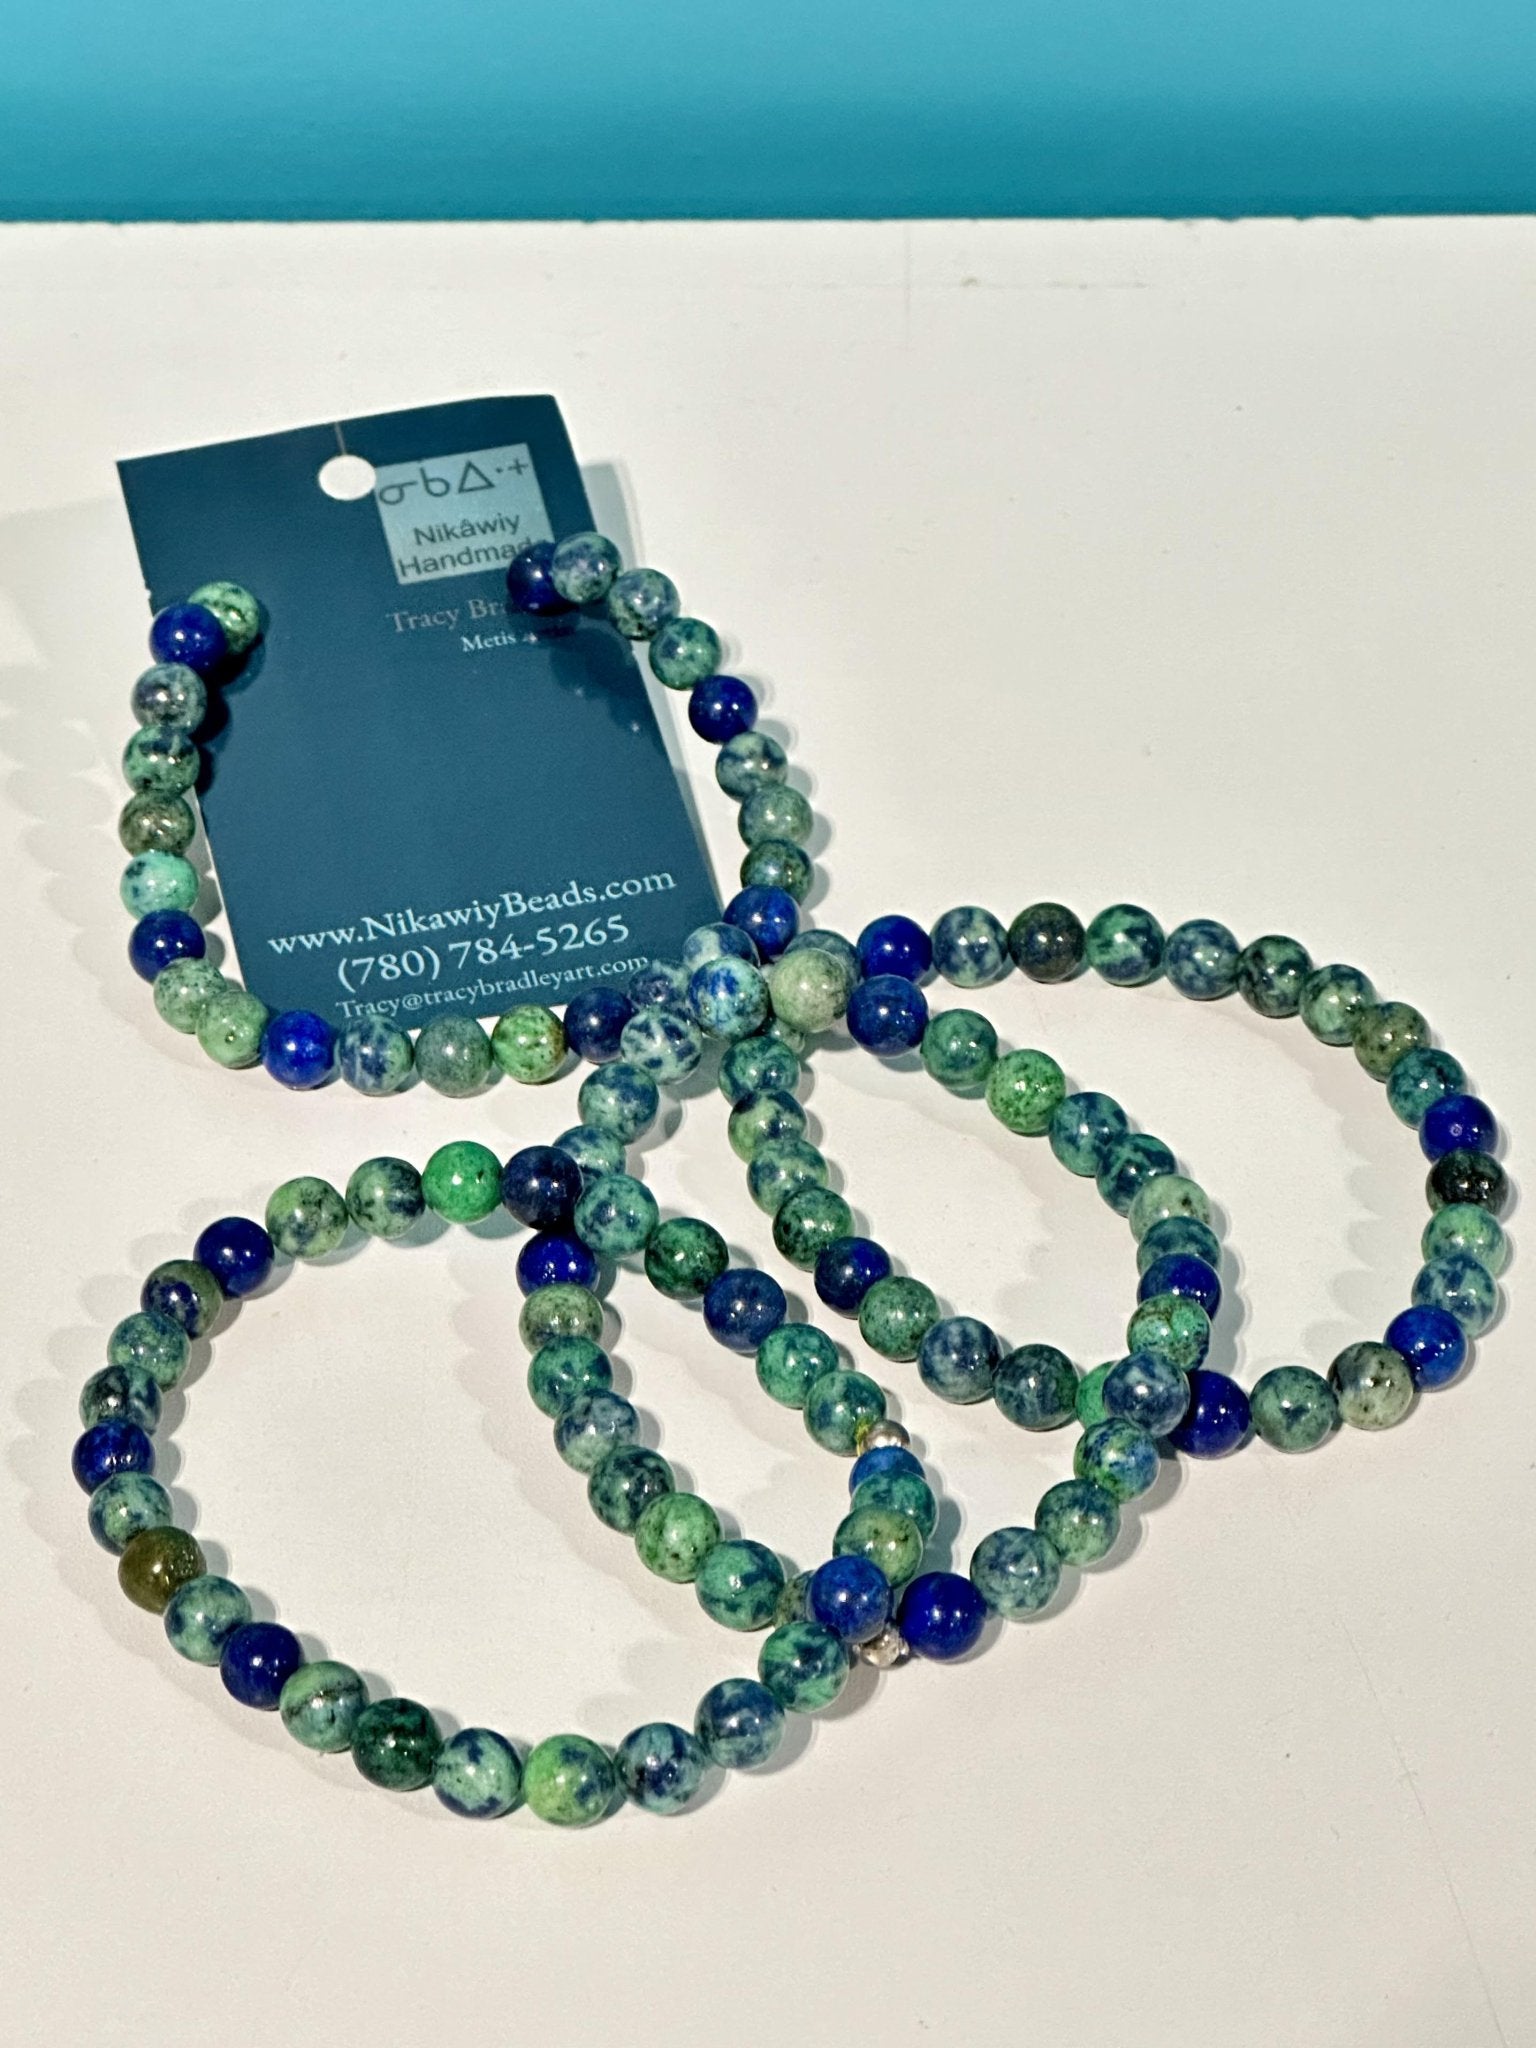 Nikawiy Beads Bracelet by Tracy Bradley - Indigenous Box